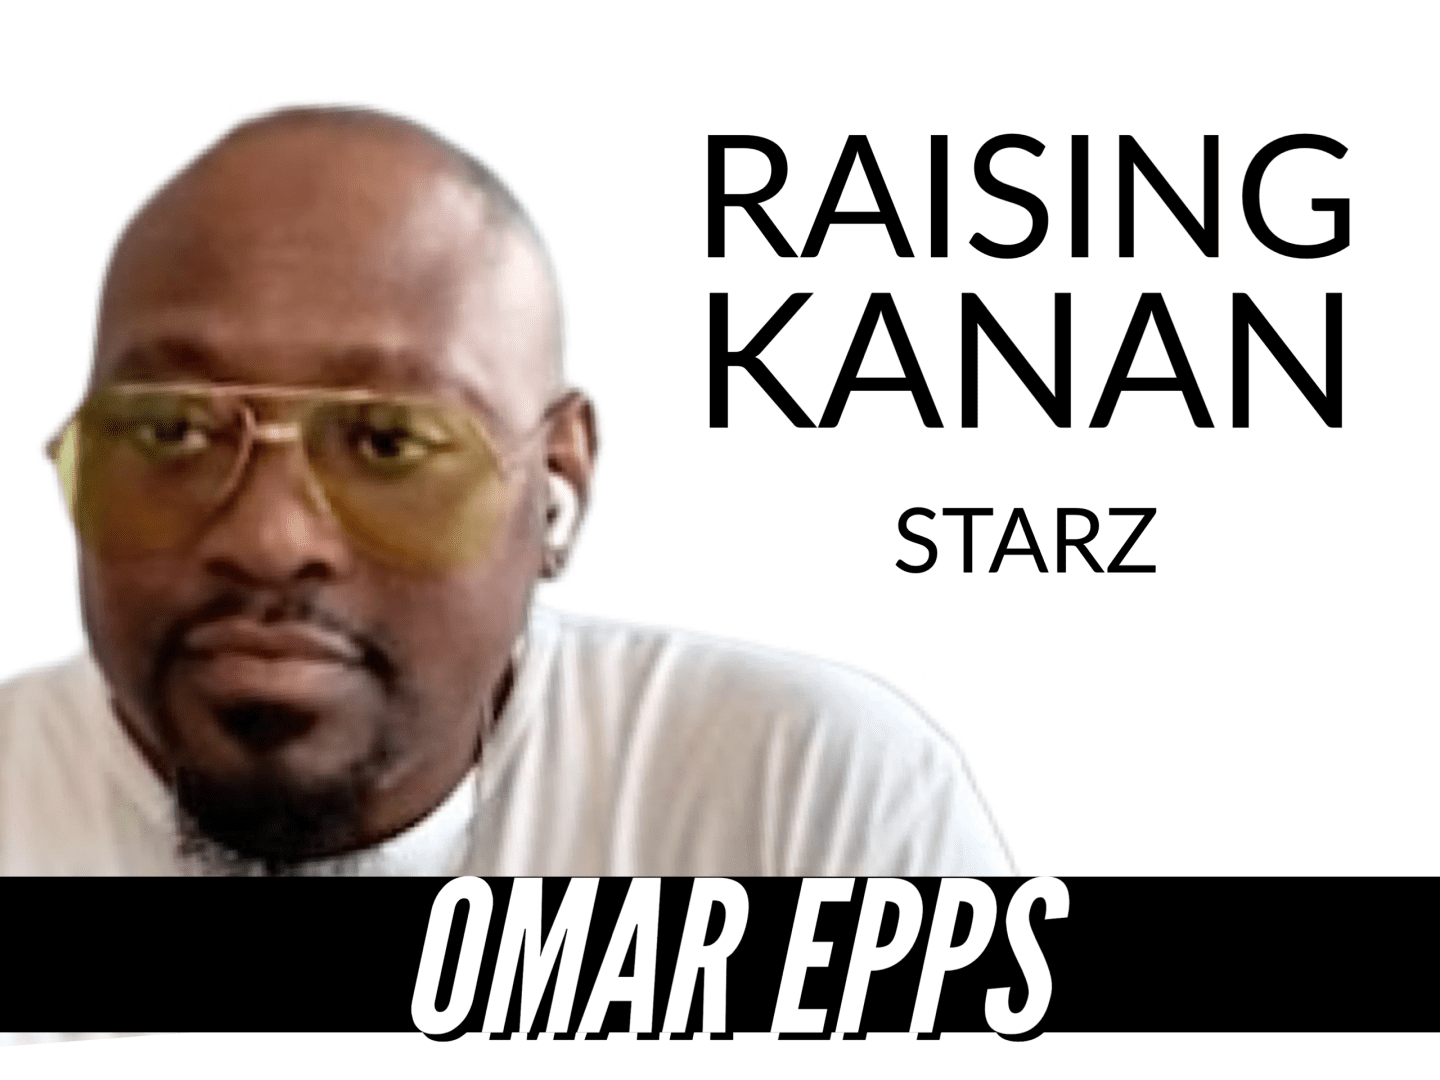 Omar Epps, Shanley Caswell bump heads in 2nd season of 'Raising Kanan'